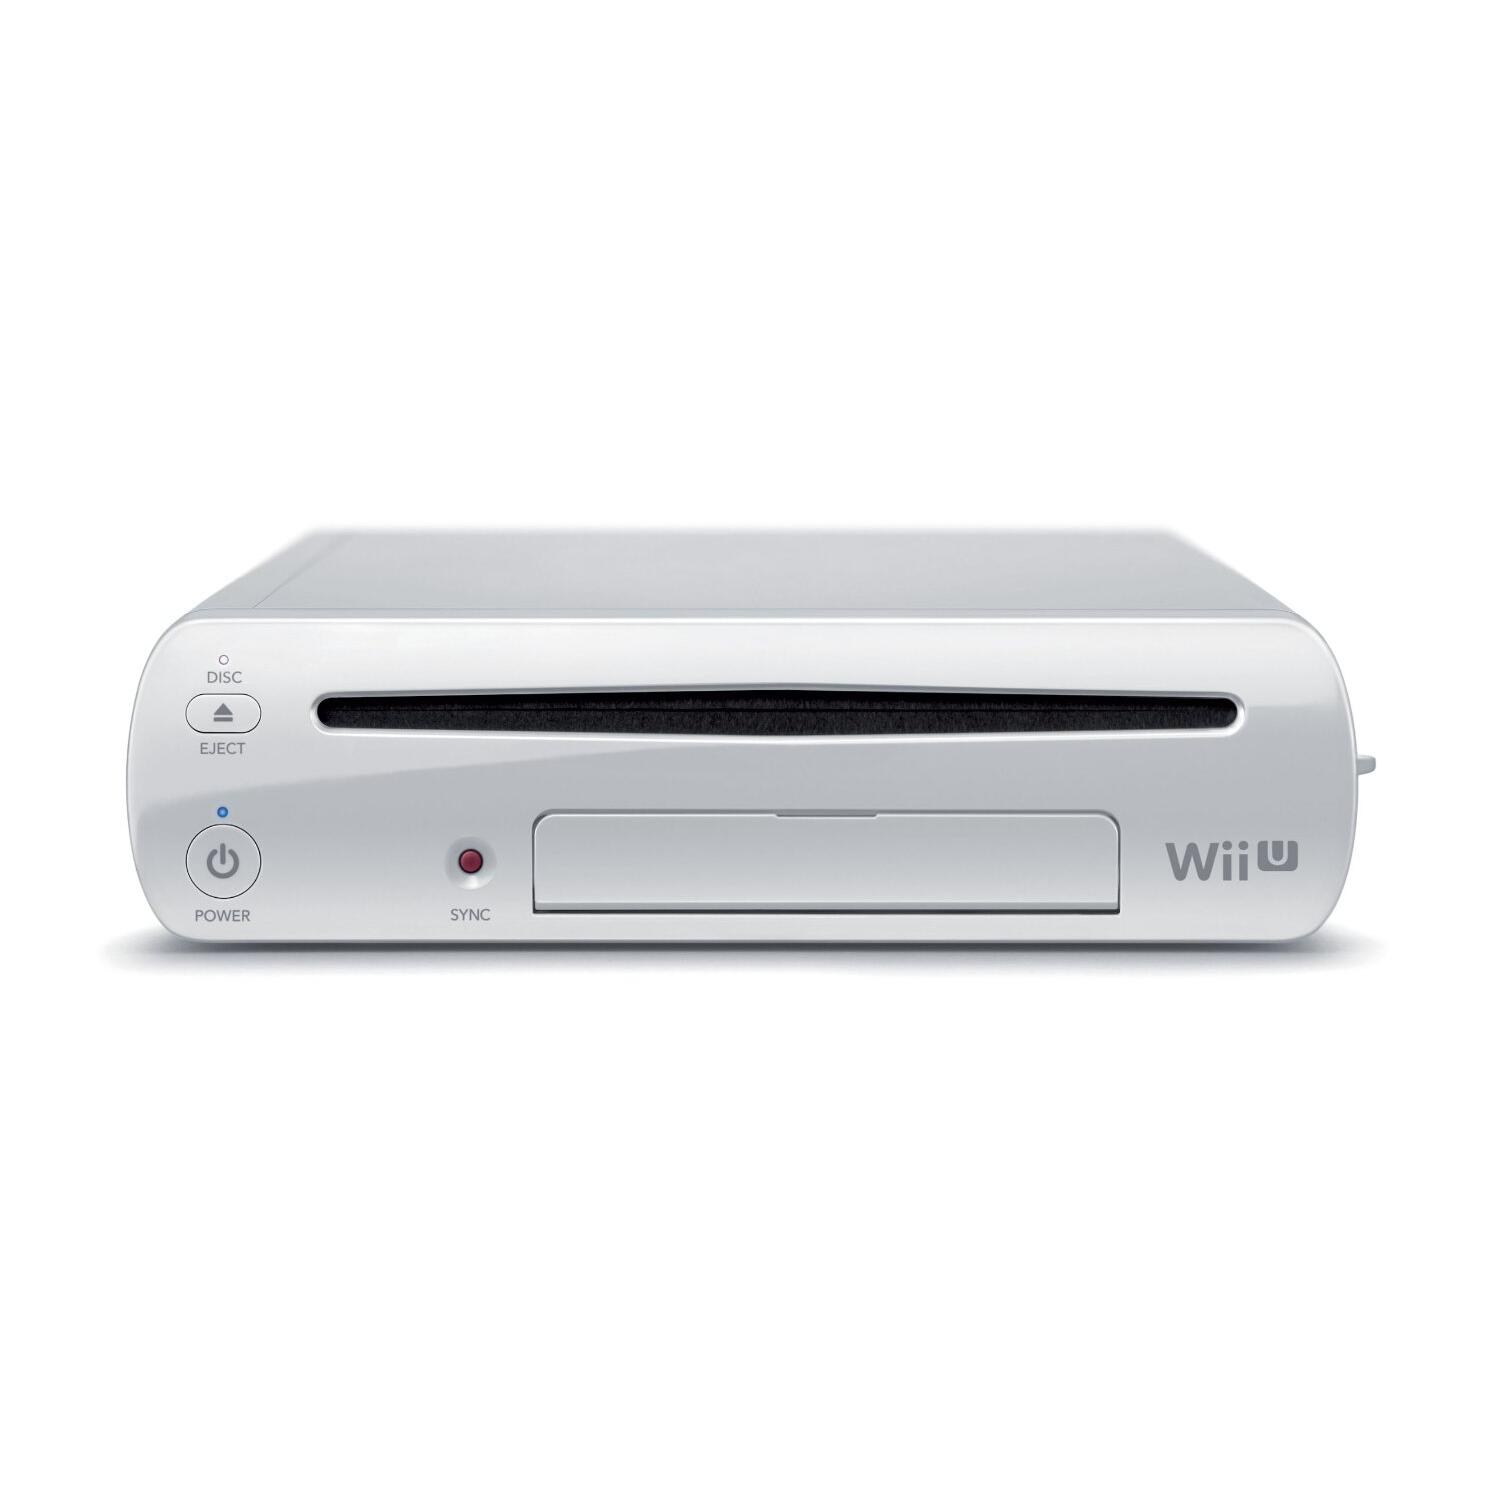 Mok idioom beweeglijkheid Wii U Console (8GB / 16GB) - Wit (Wii) kopen - €44